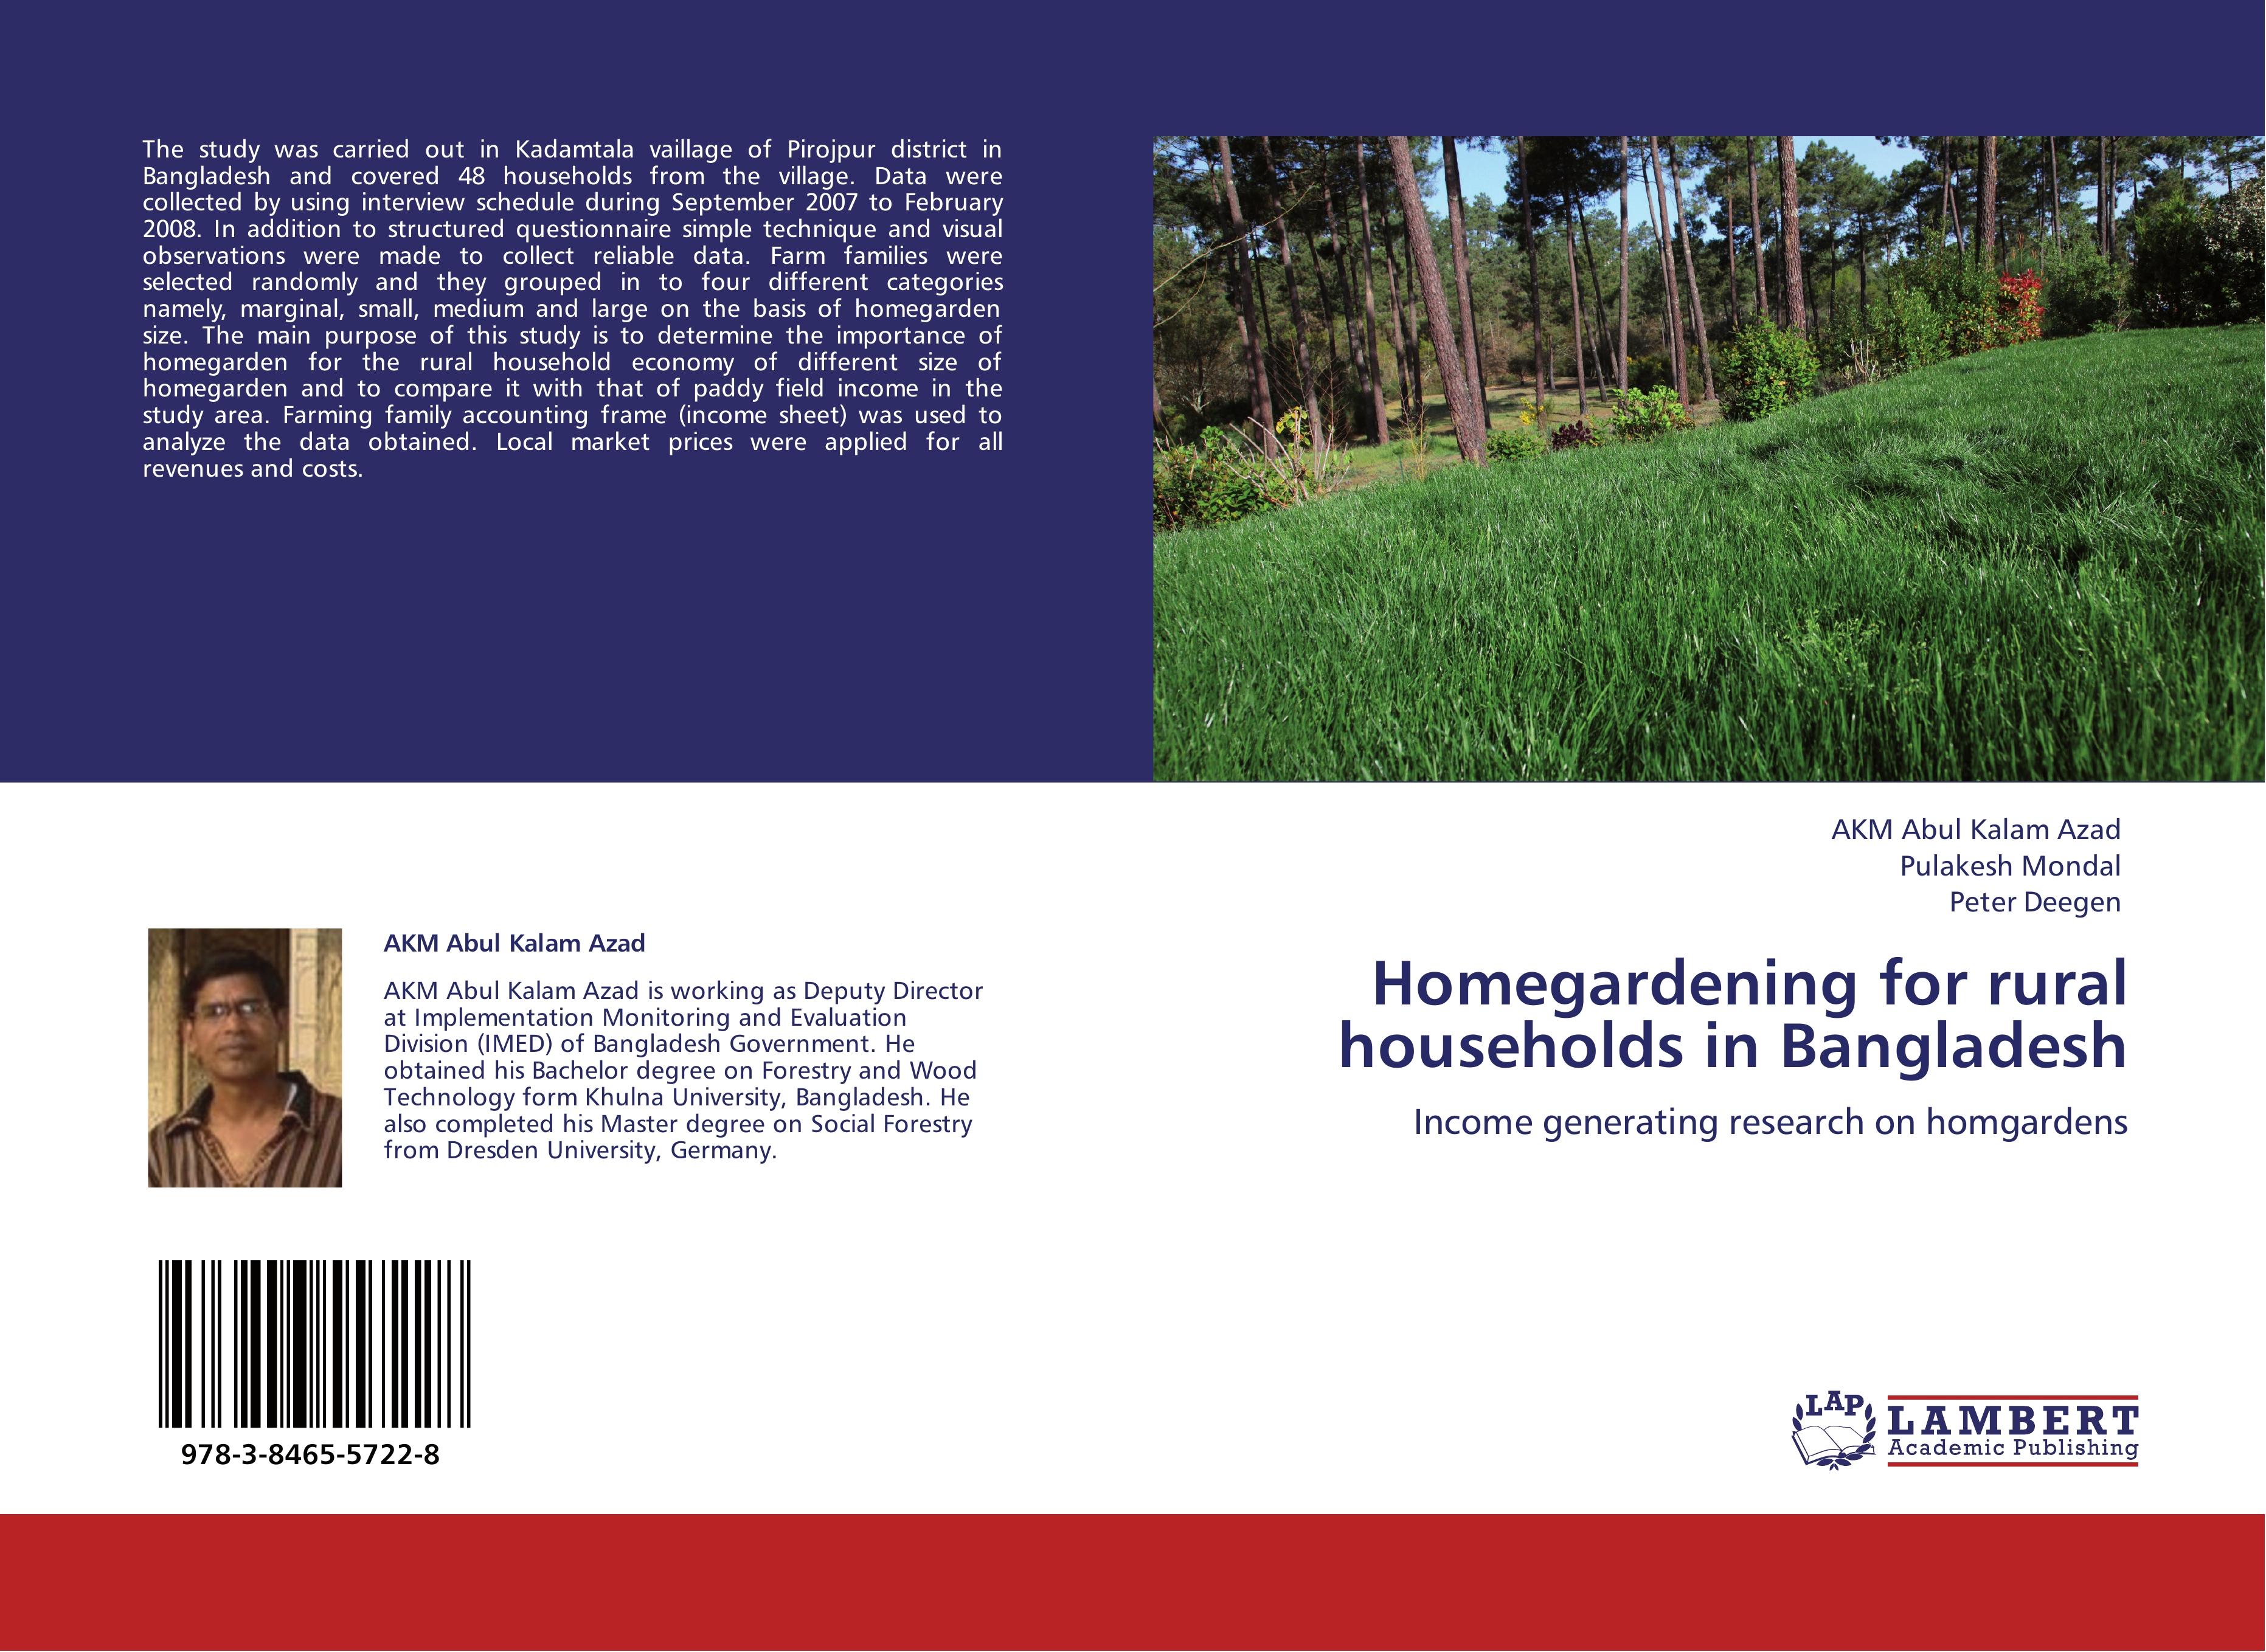 Homegardening for rural households in Bangladesh - AKM Abul Kalam Azad Pulakesh Mondal Peter Deegen